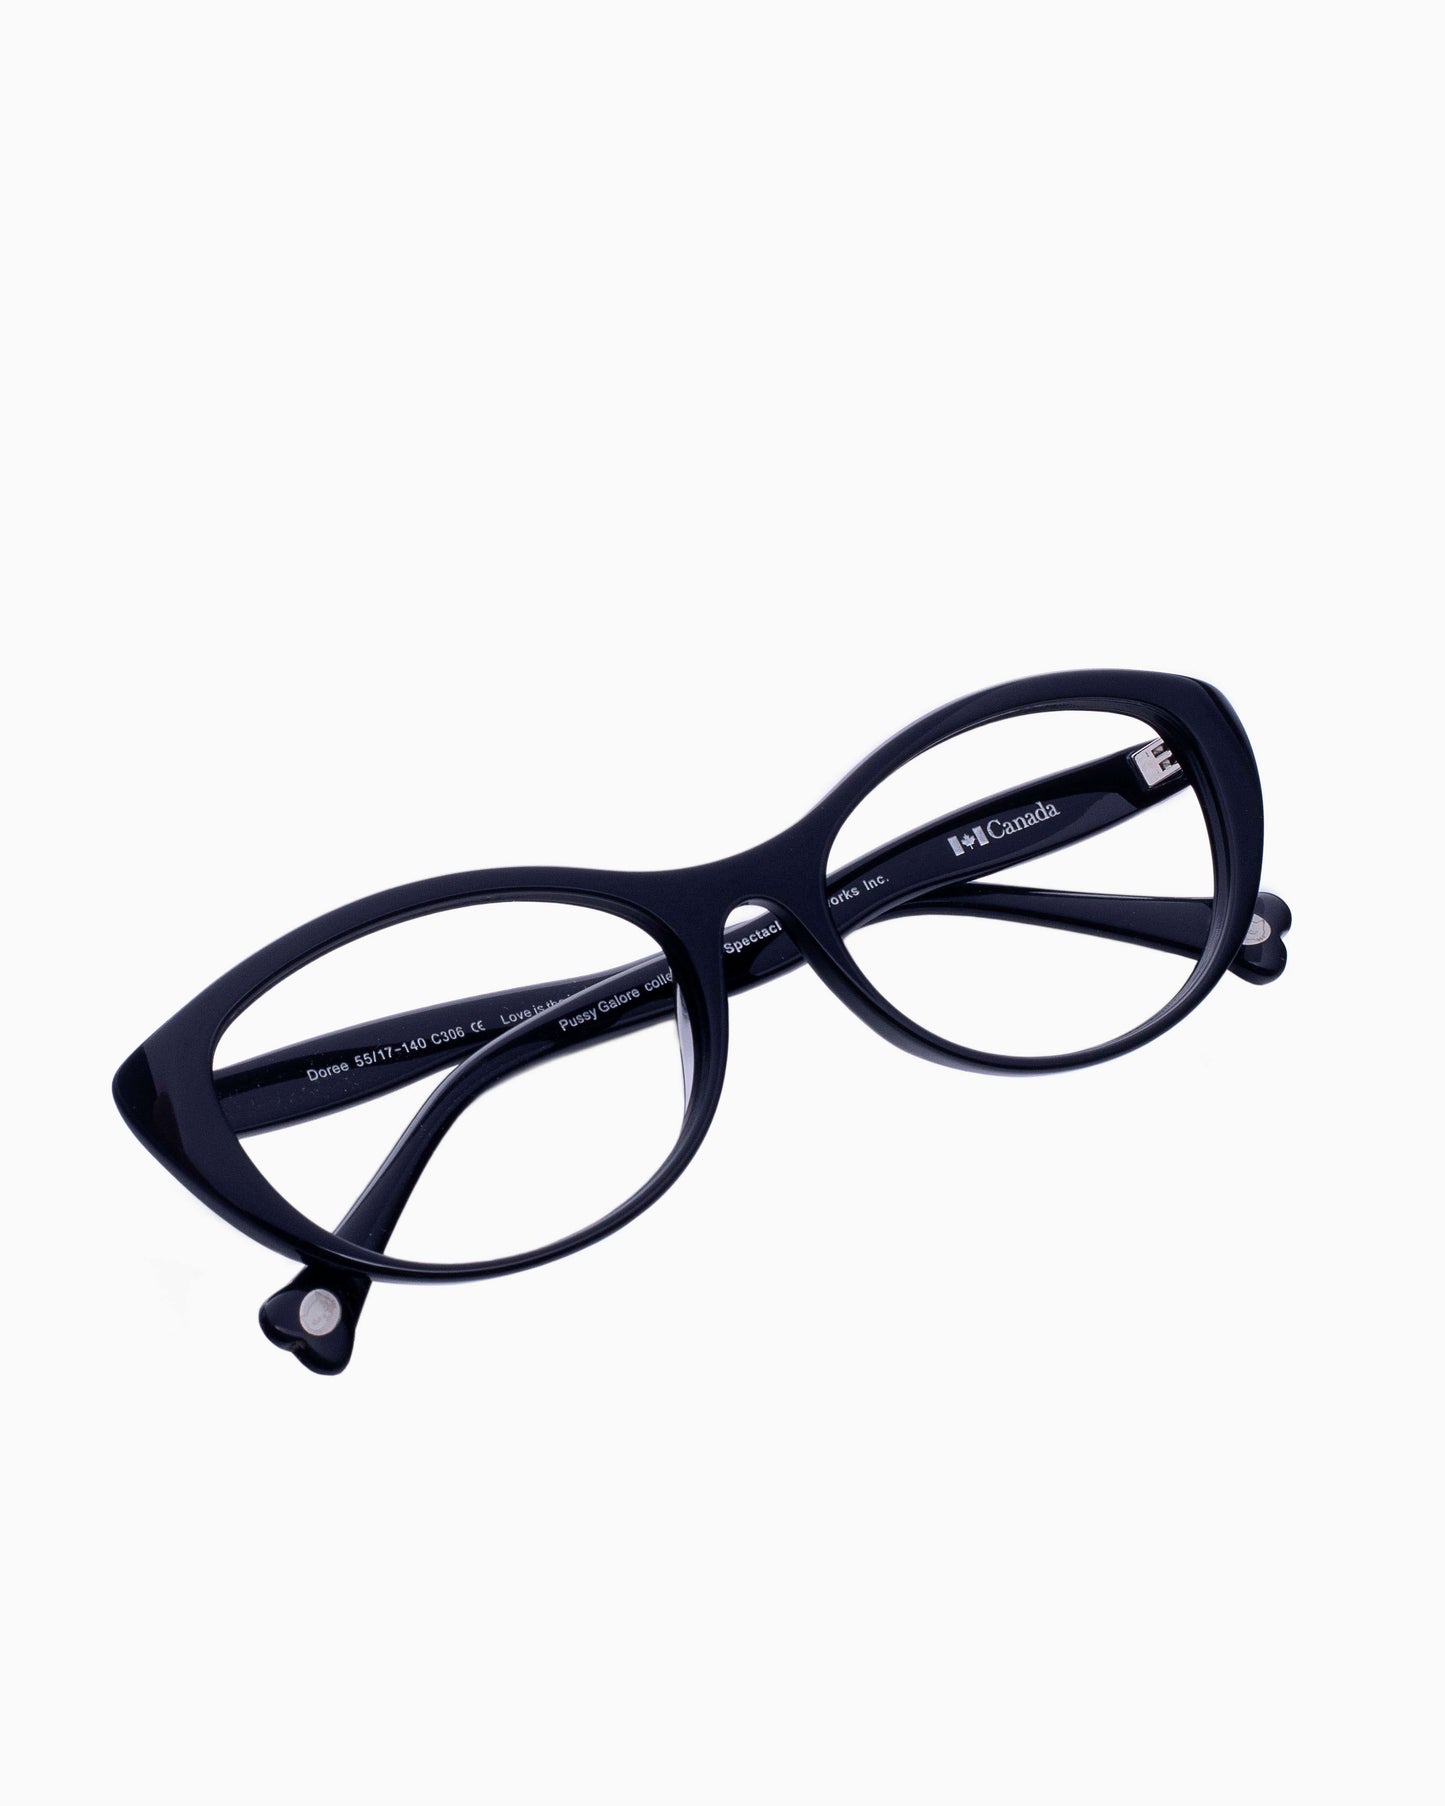 Spectacleeyeworks - Doree - C306 | Bar à lunettes